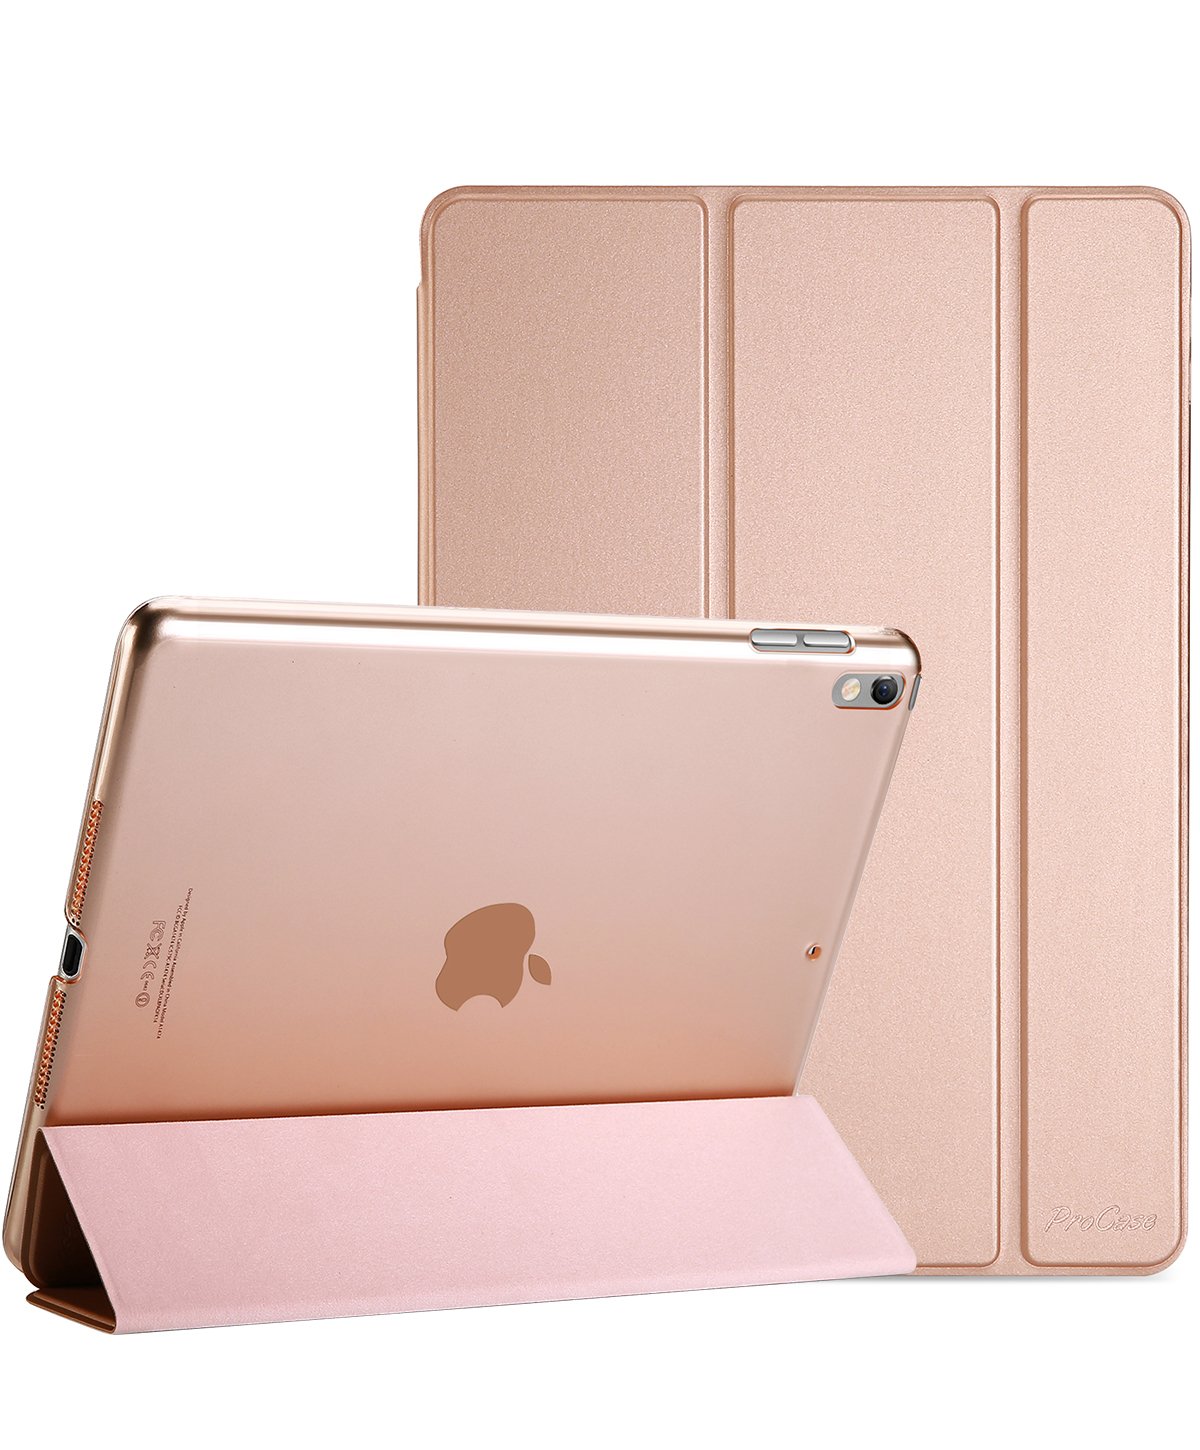 iPad Air 10.5 3rd Generation 2019 / iPad Pro 10.5 2017 Case | ProCase rosegold